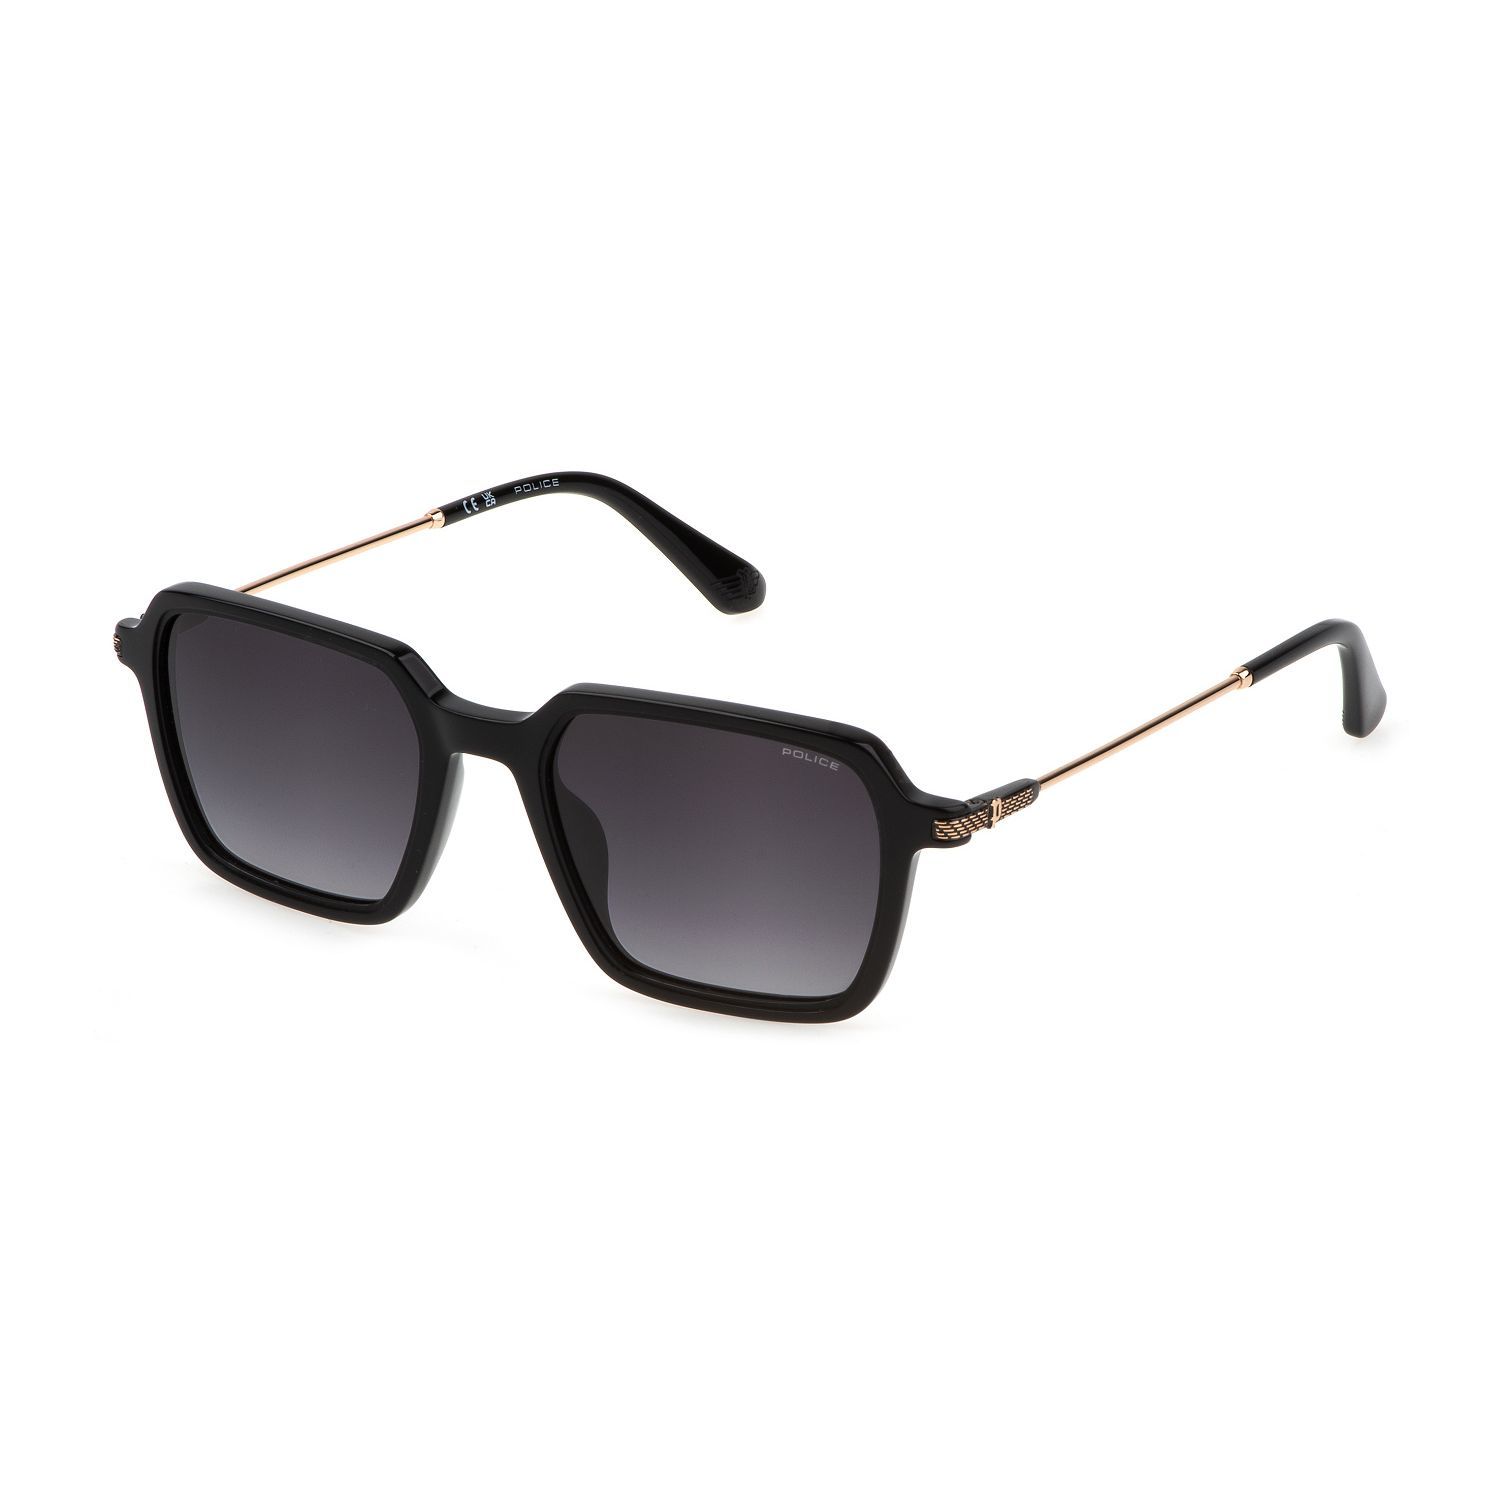 SPLL10M Square Sunglasses 700 - size 52